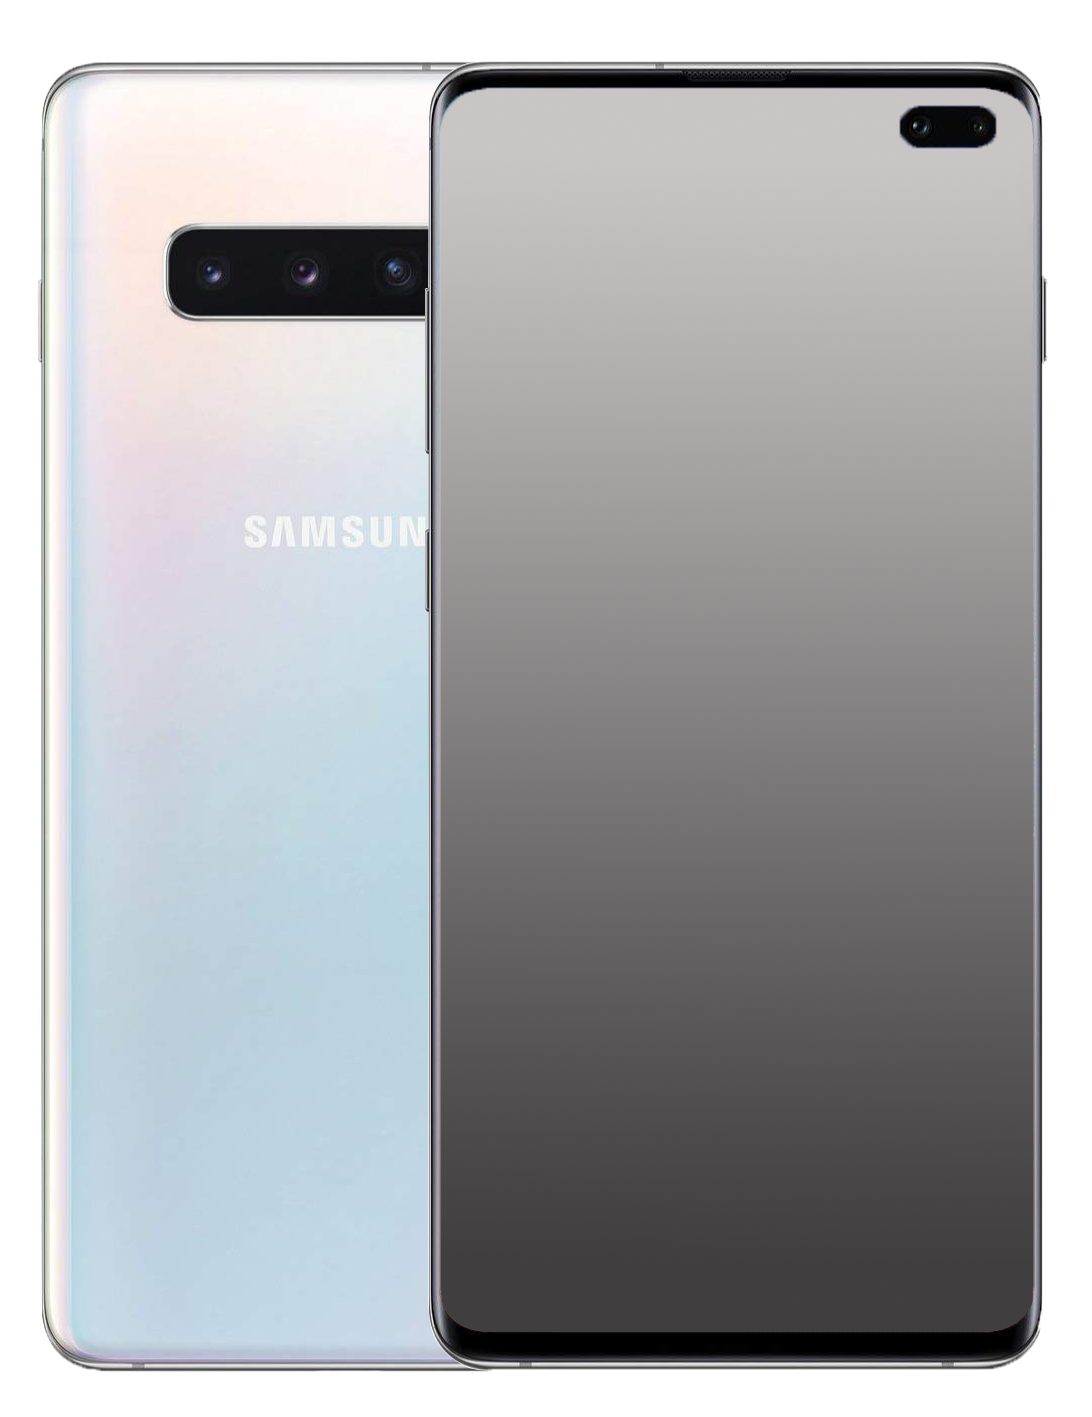 Samsung Galaxy S10+ Plus Single-SIM glanz weiß - Ohne Vertrag